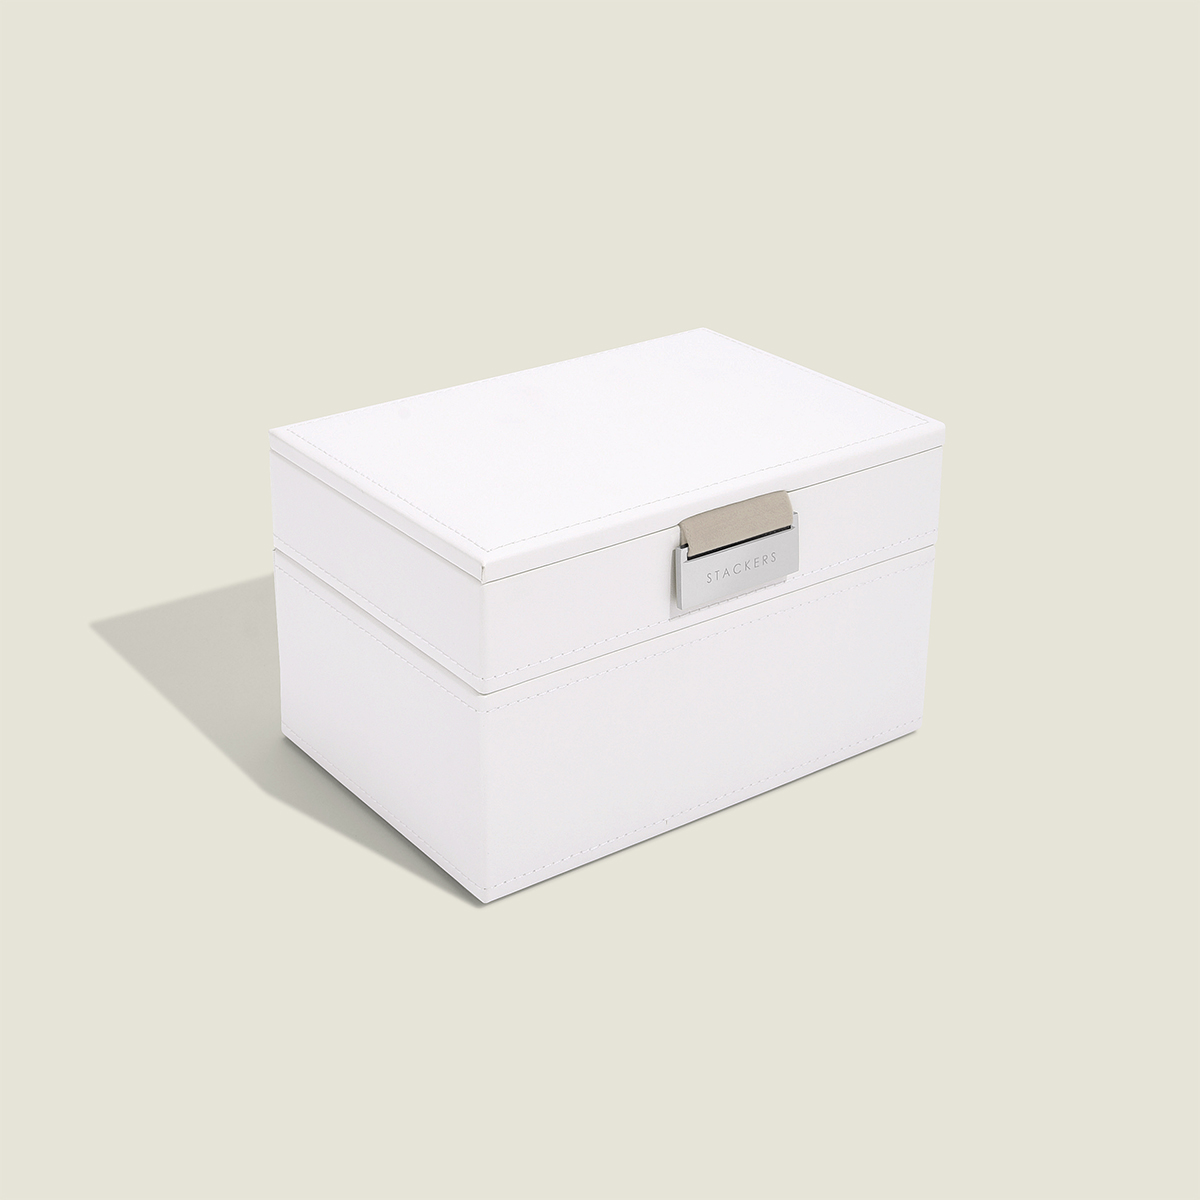 Stackers Mini Jewelry Box Starter Set White Set of 2